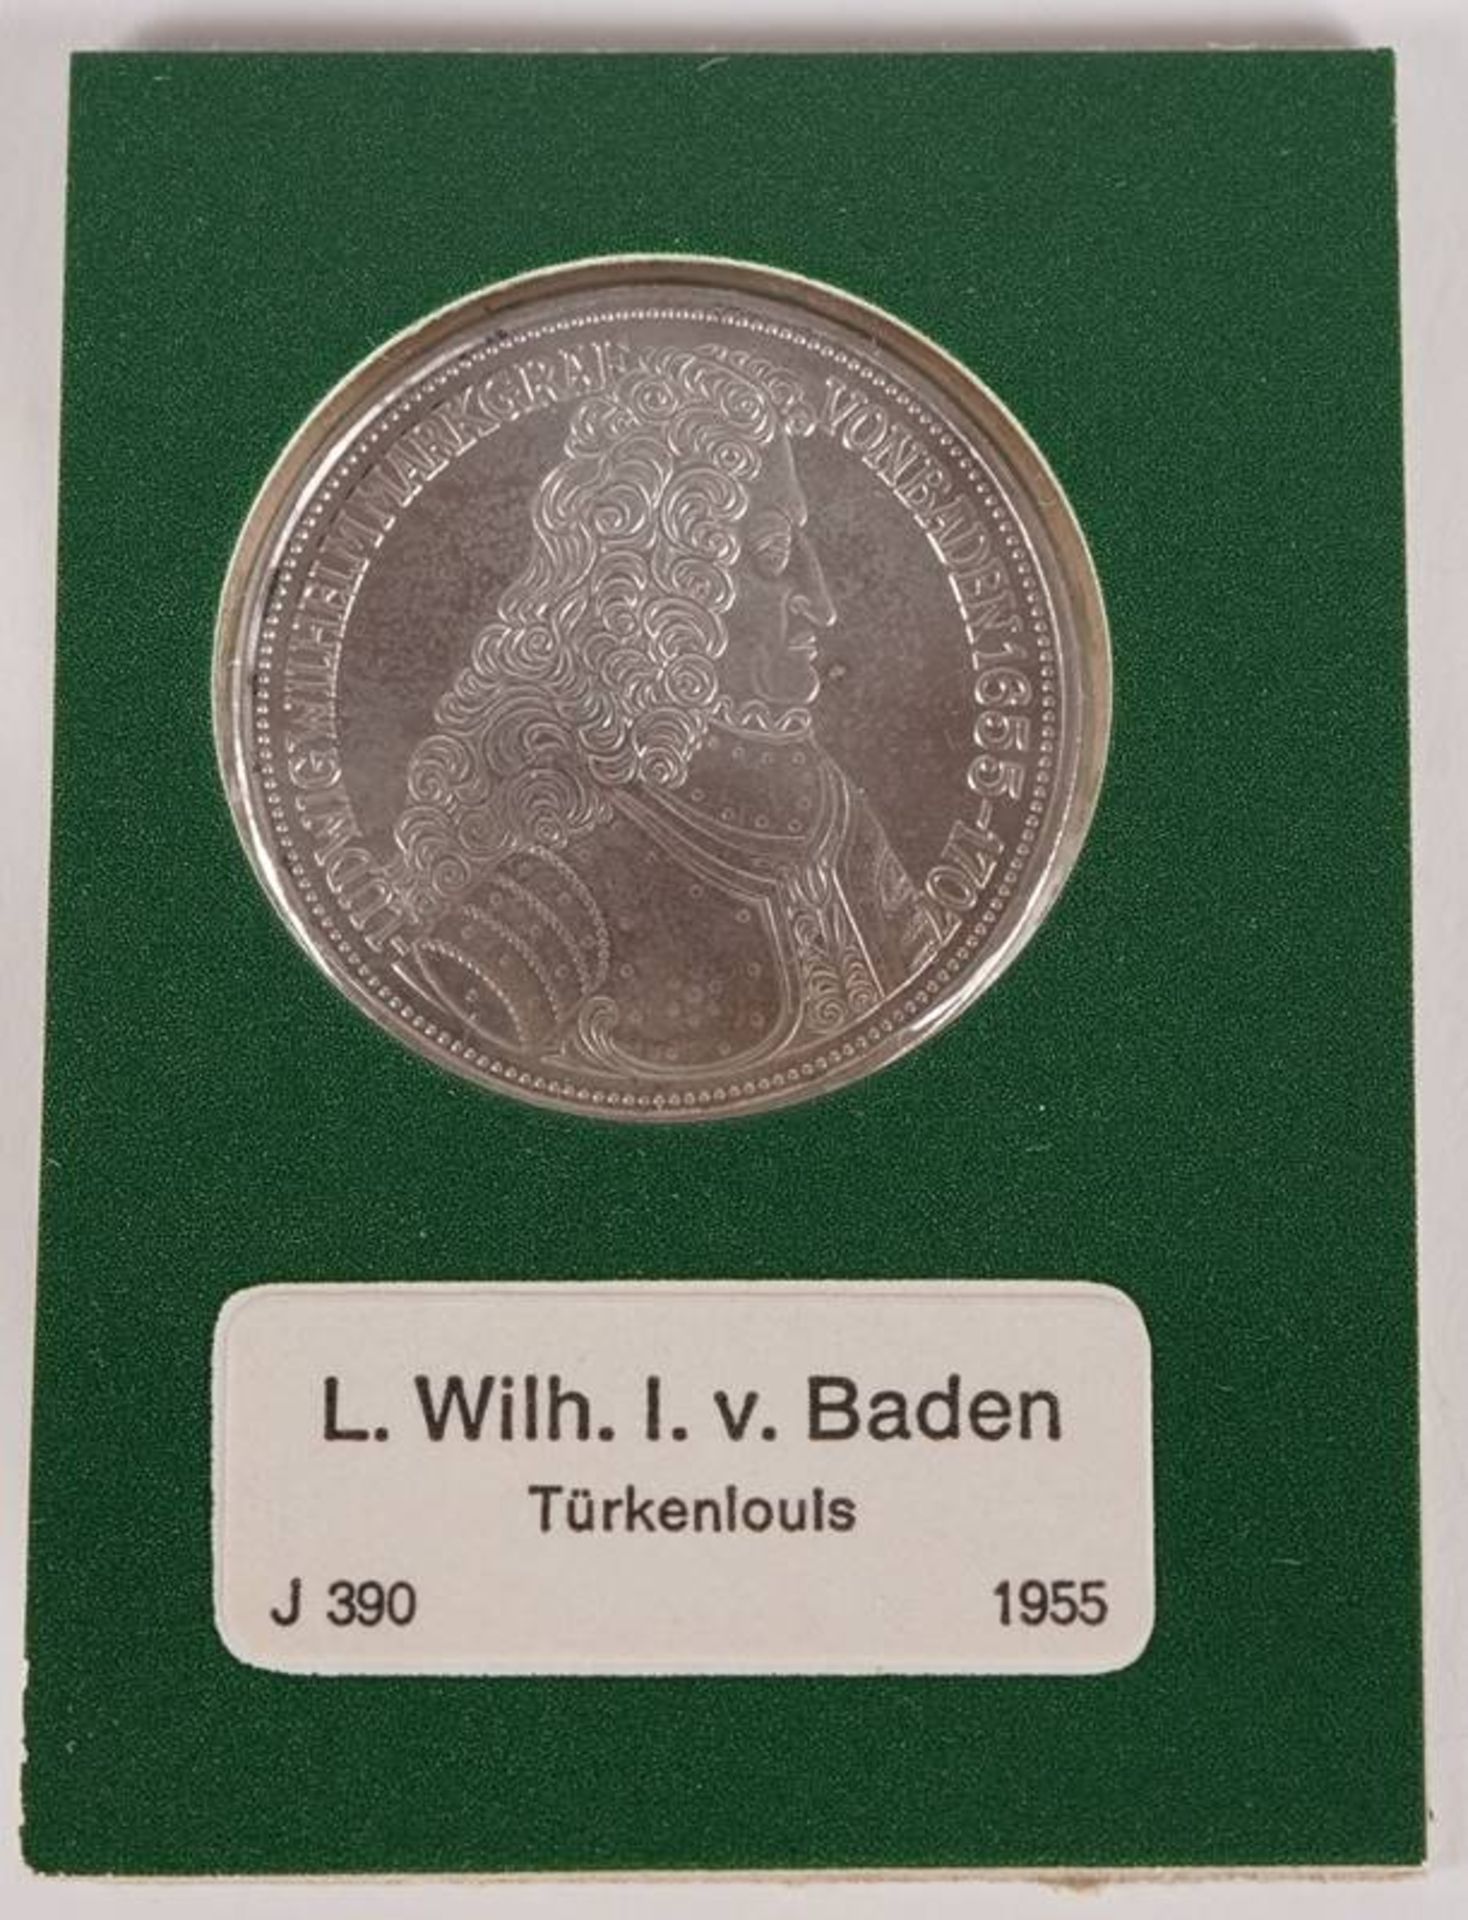 5 DM Commemorative Coin